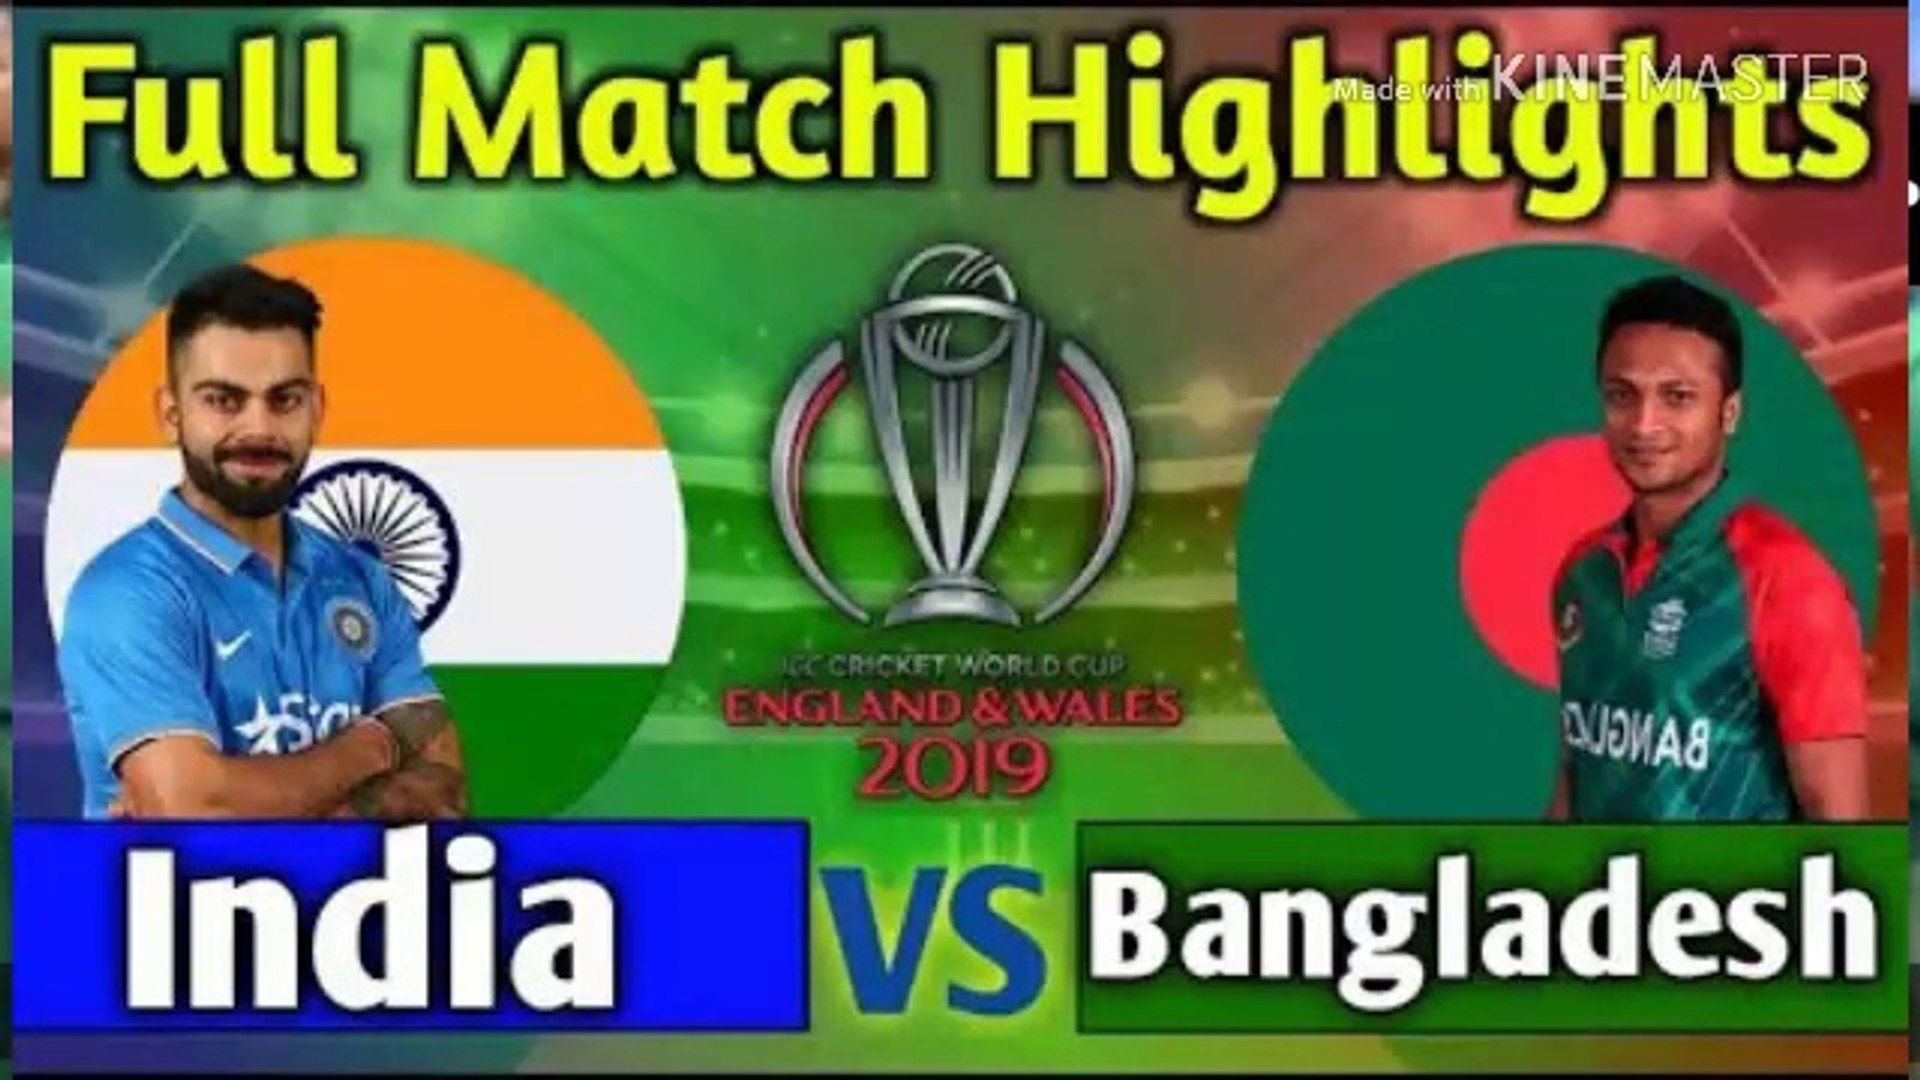 India vs Bangladesh full match highlights | IND vs BAN match 2019 highlights  - video Dailymotion